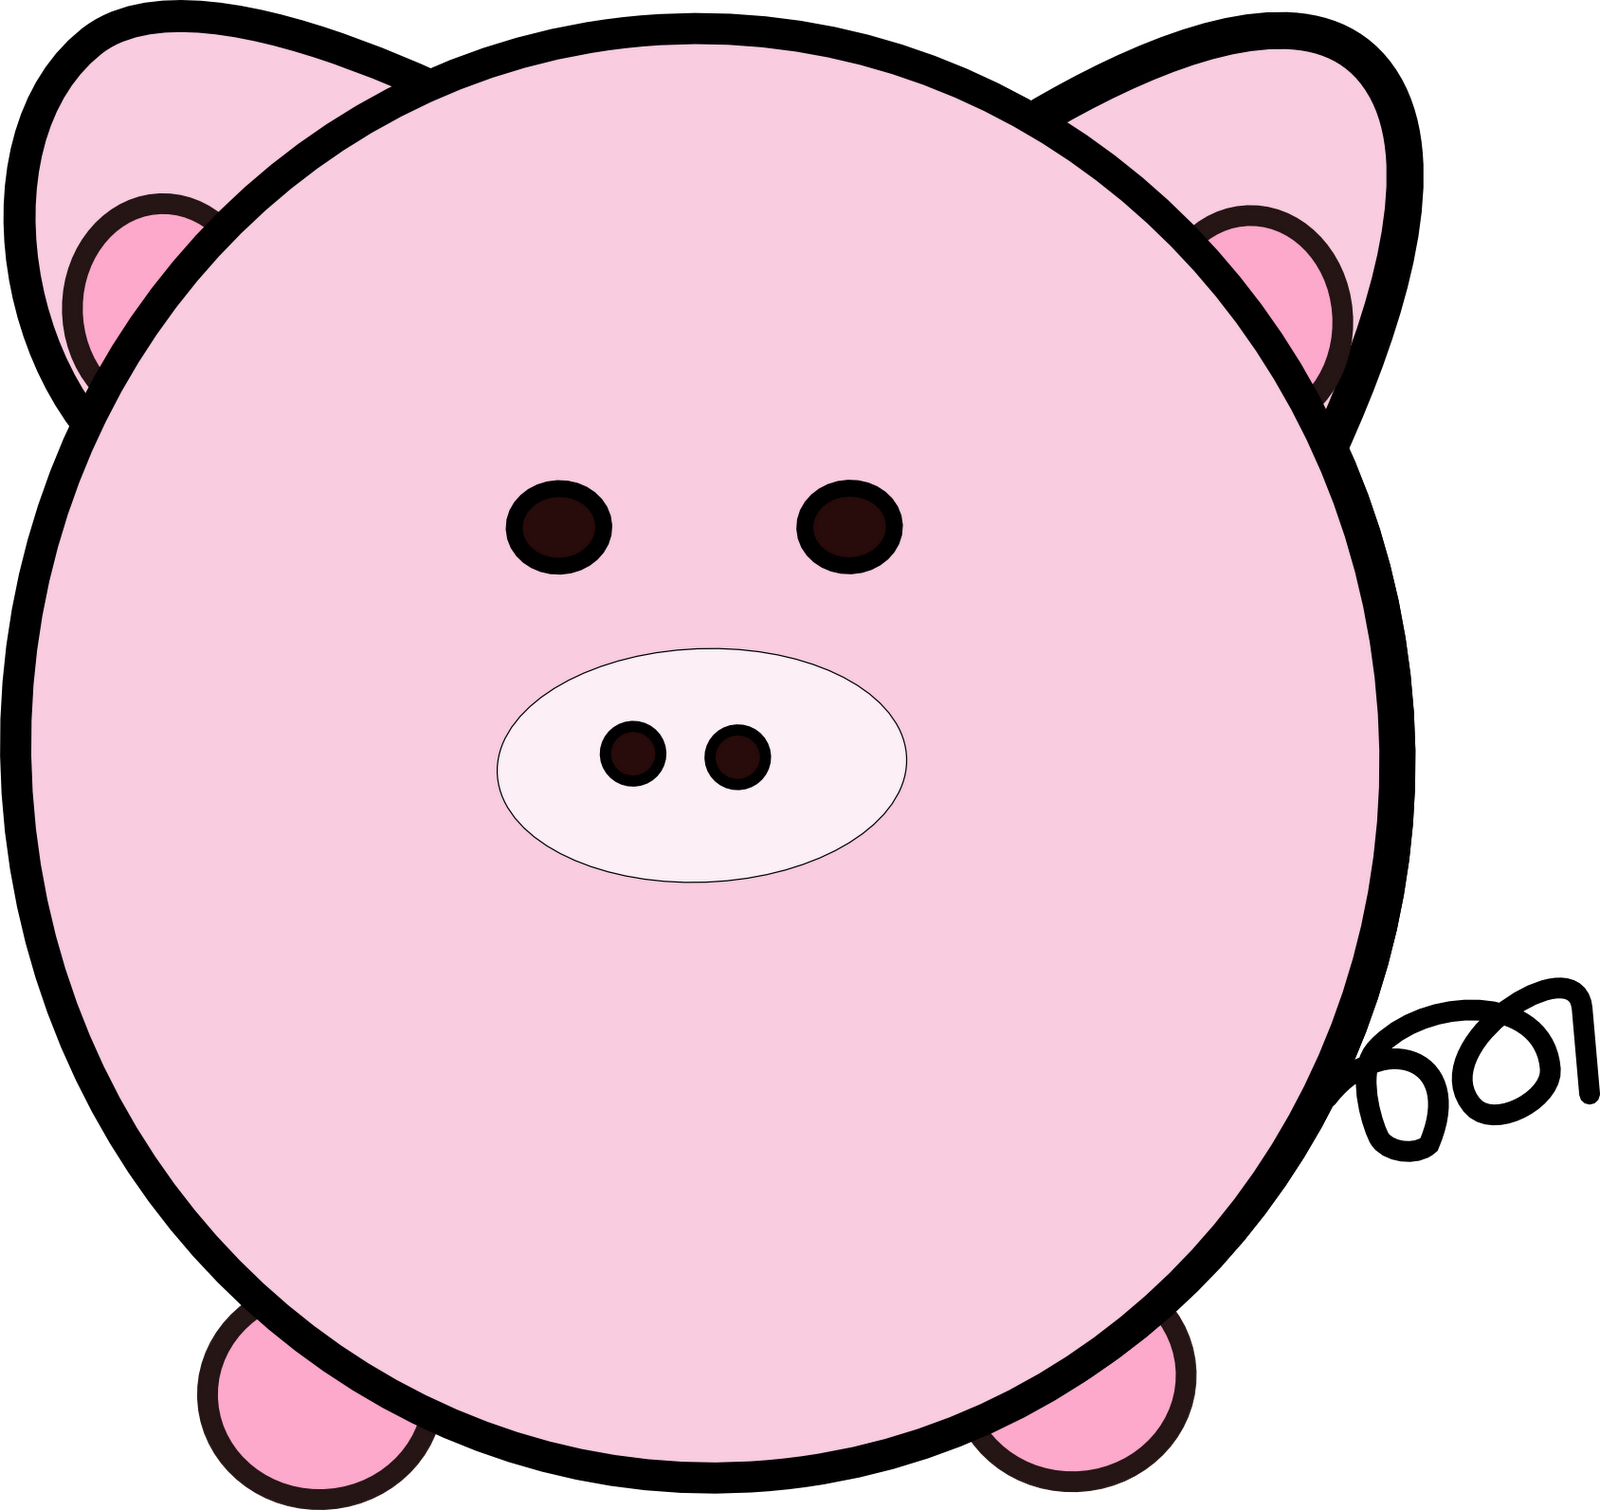 Royalty-free Pig Public Domain Clip Art - Royalty-free Pig Public Domain Clip Art (1600x1510)